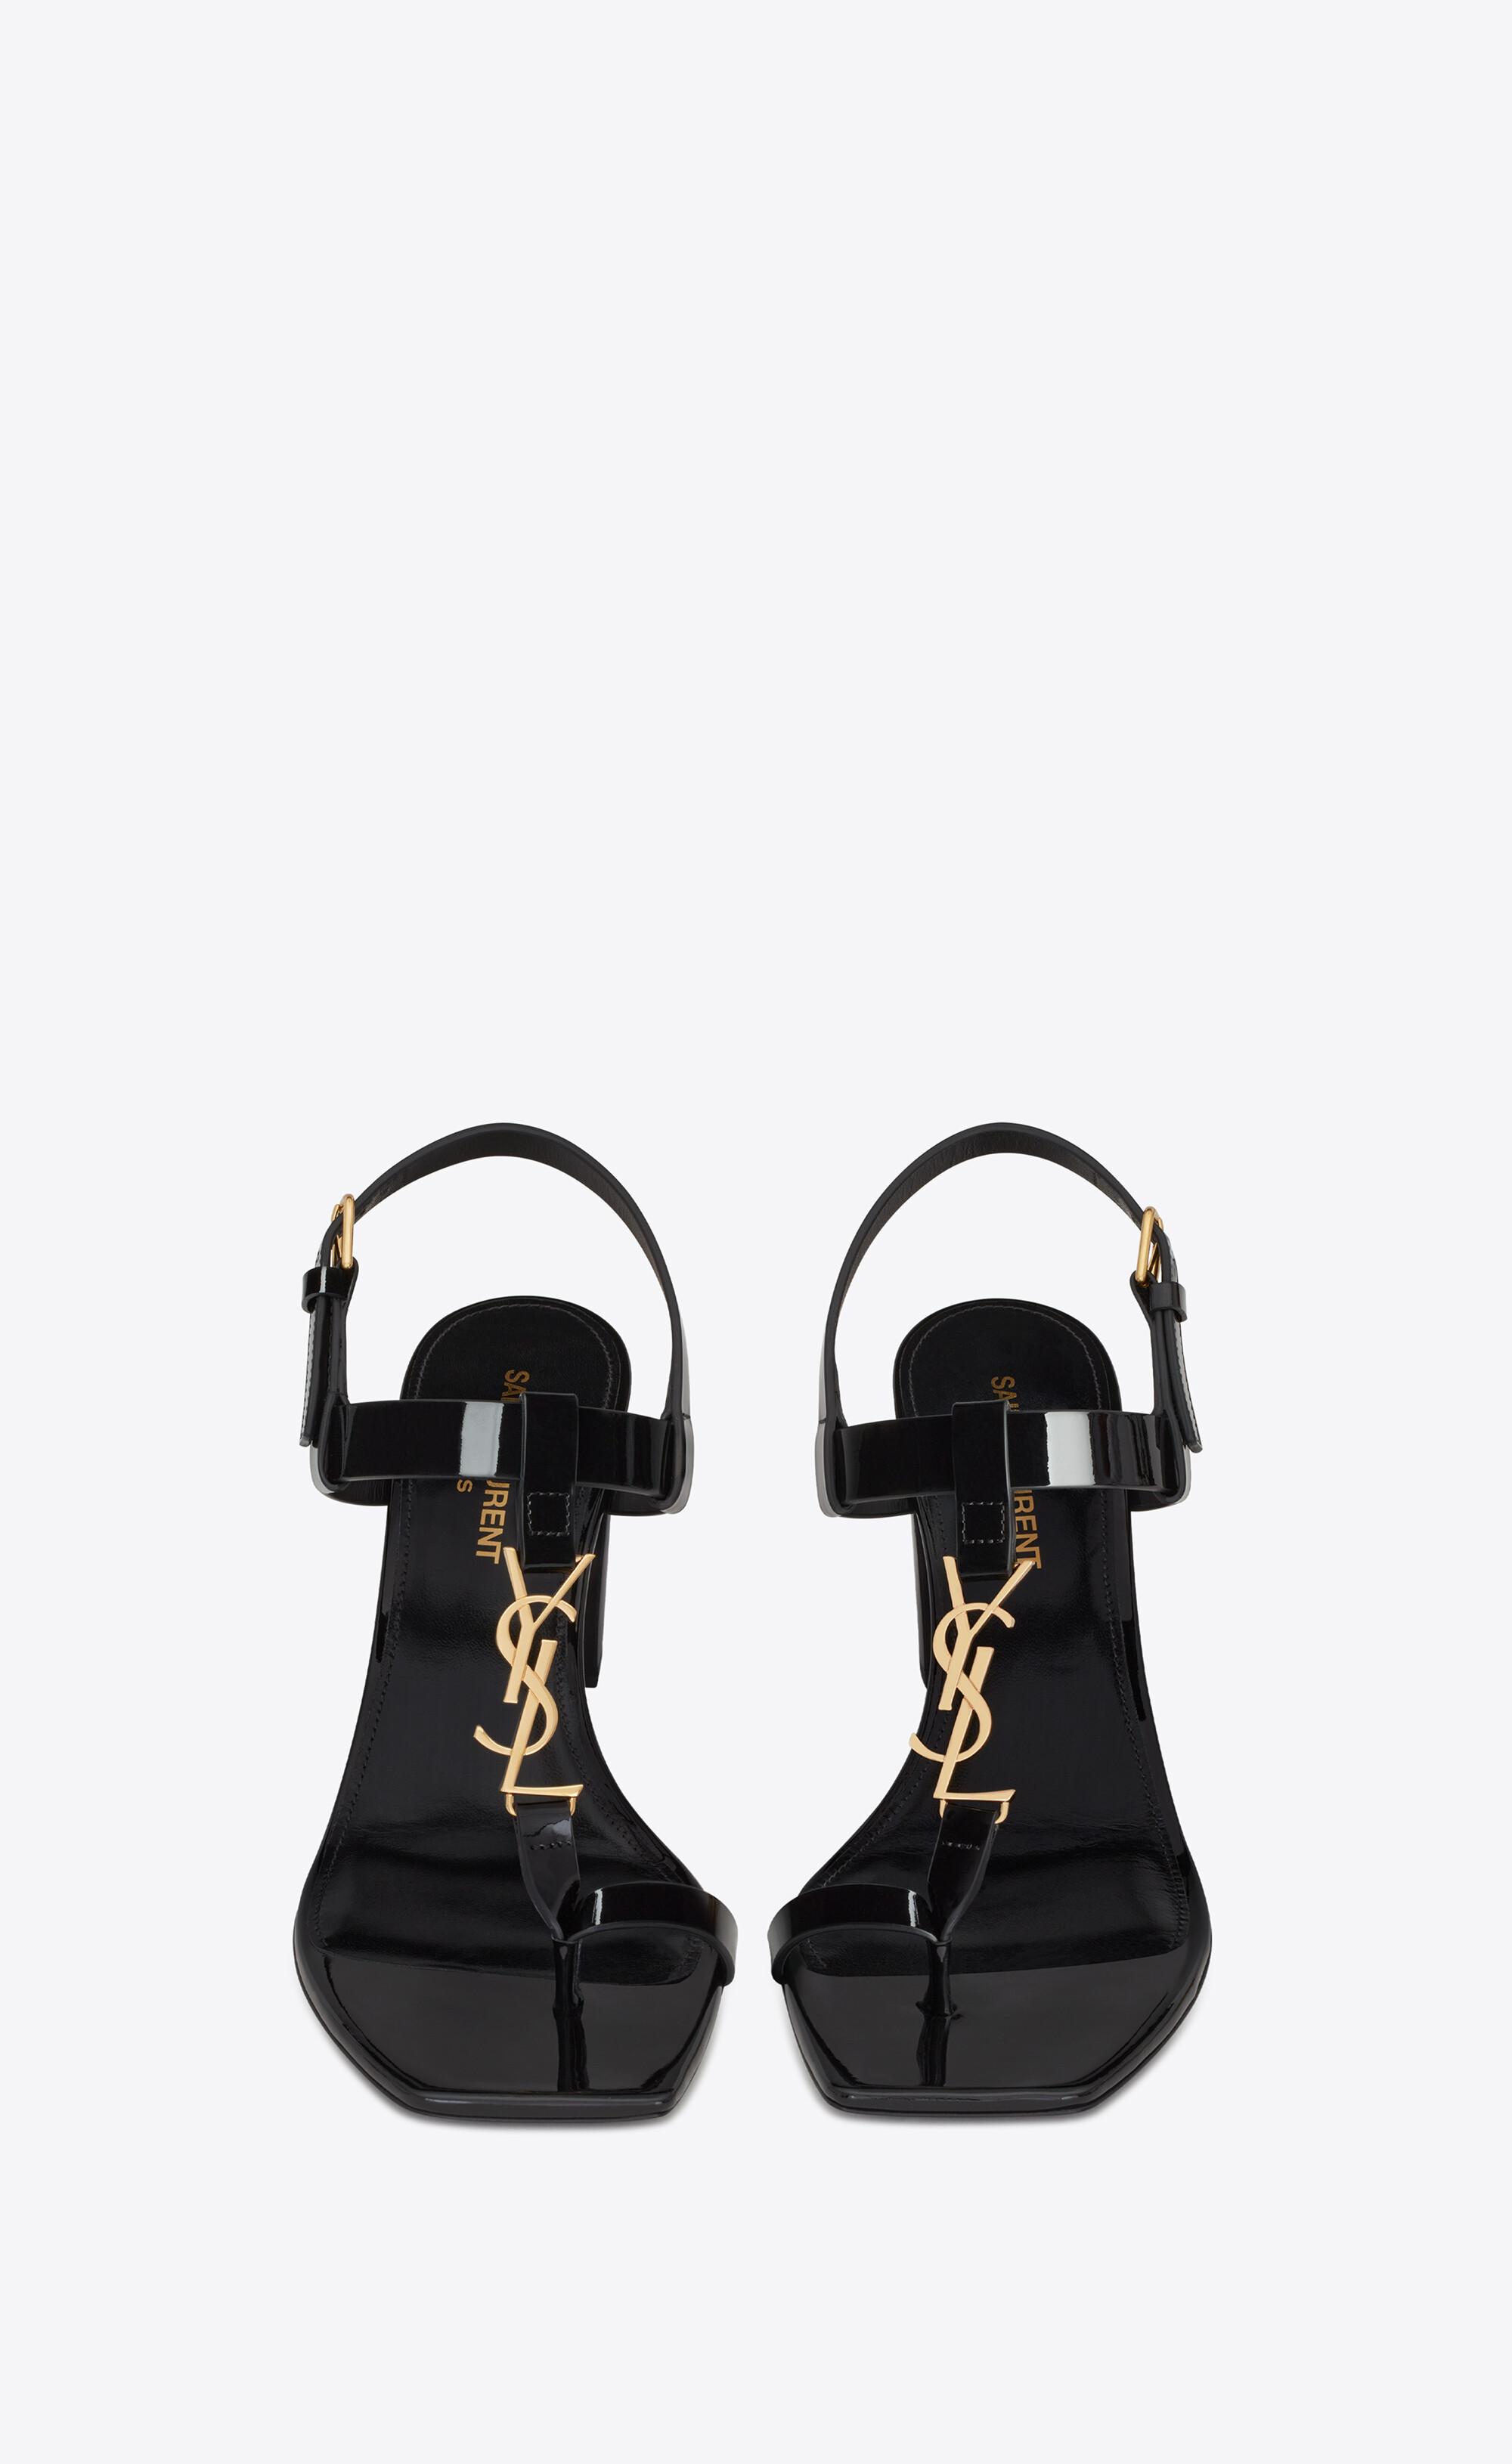 Patent Leather Sandals Yves Saint Laurent Black Size EU In